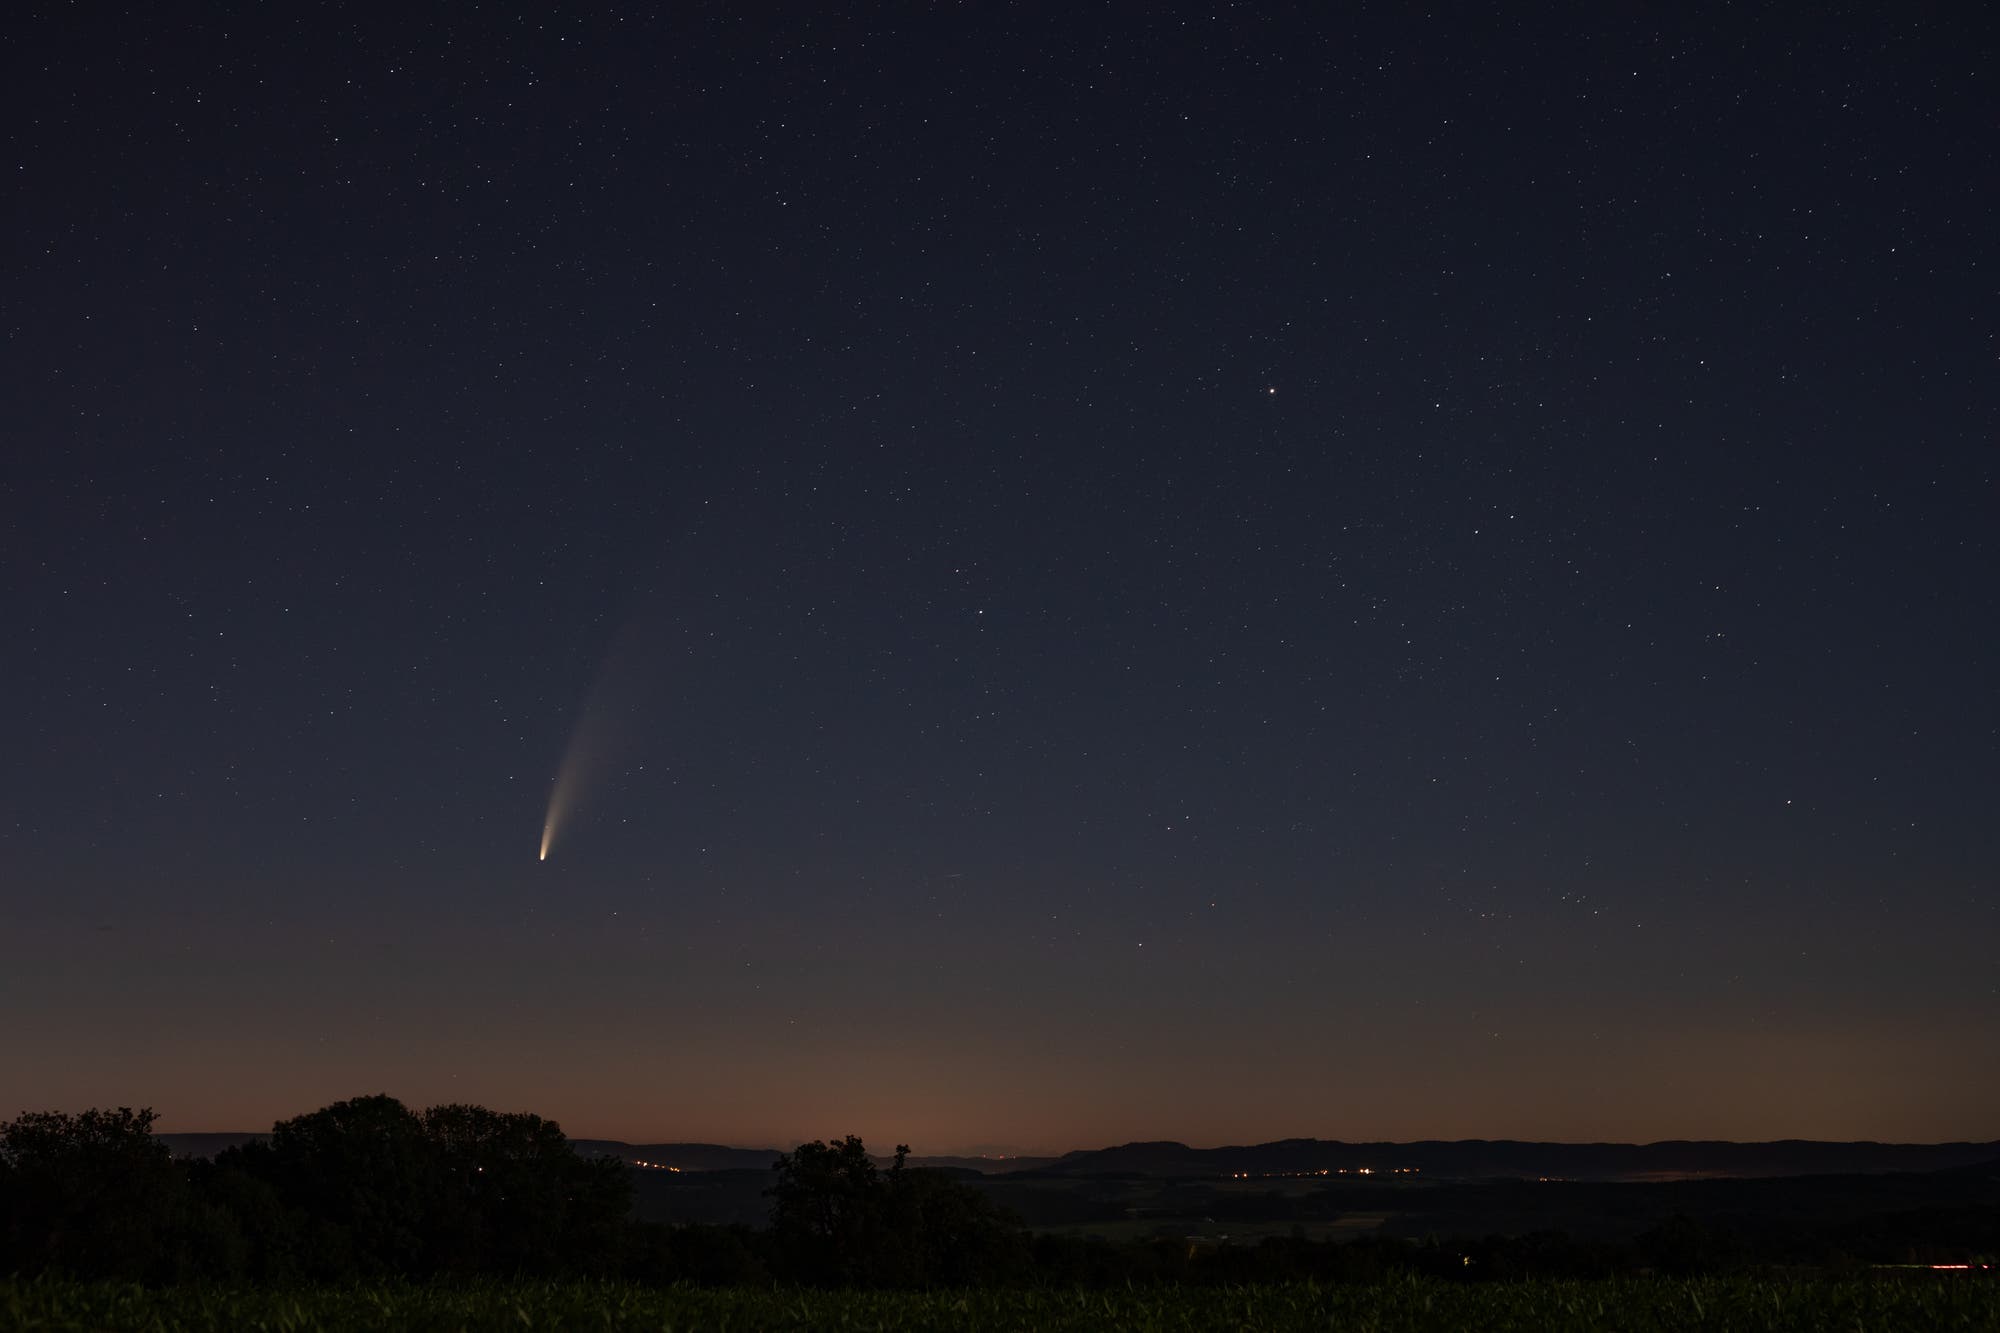 Komet Neowise am 12. Juli 2020